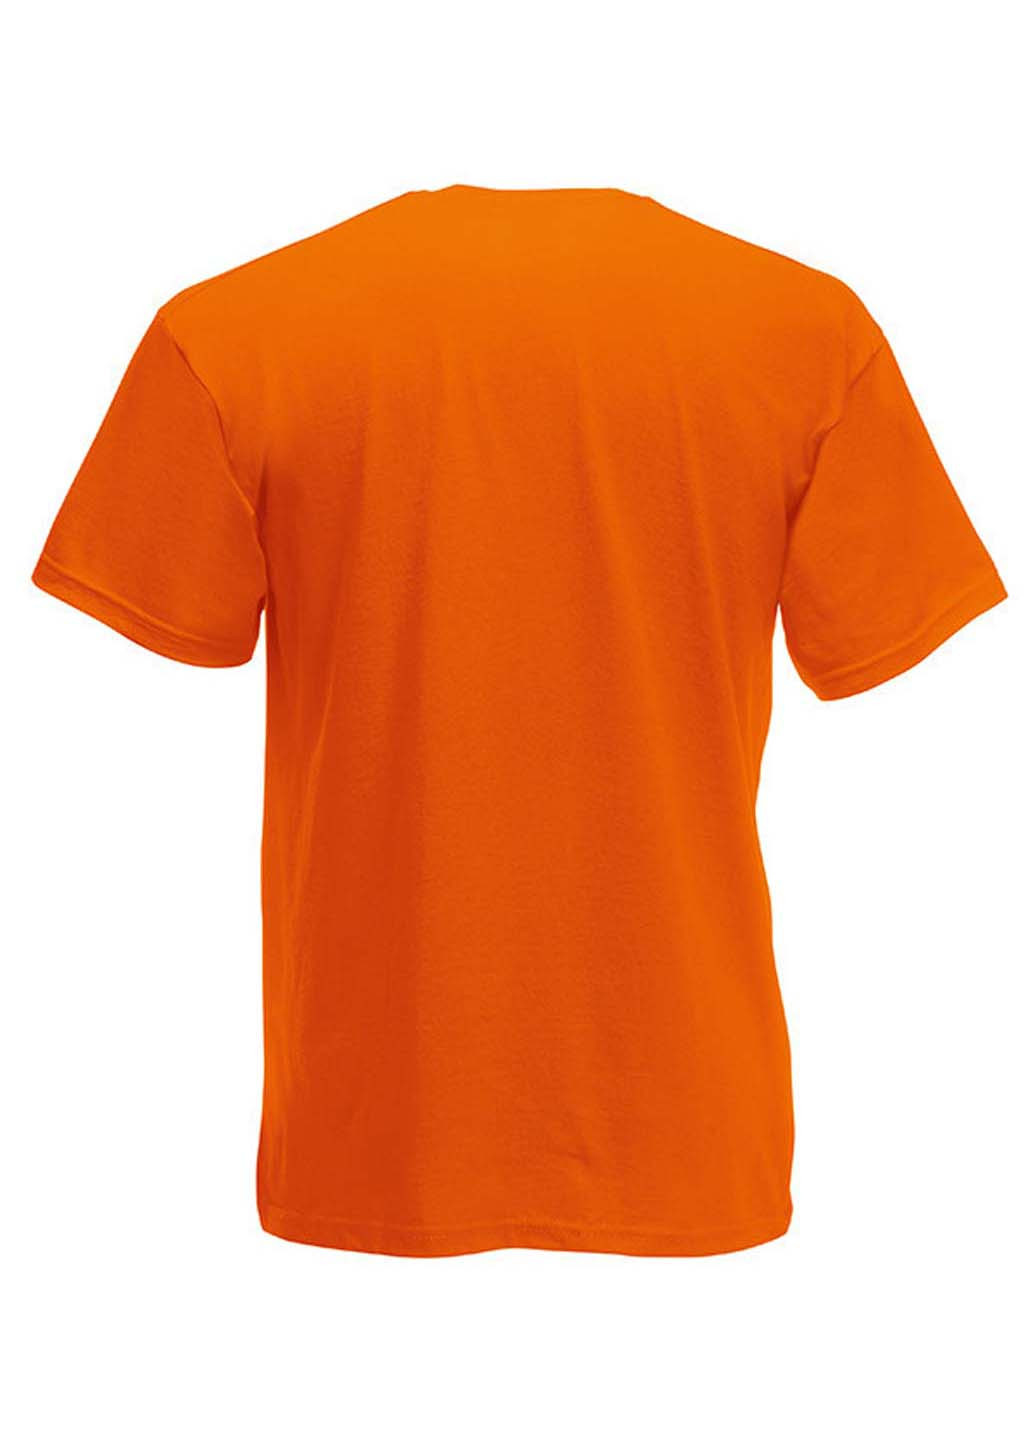 Оранжевая футболка Fruit of the Loom Valueweight v-neck